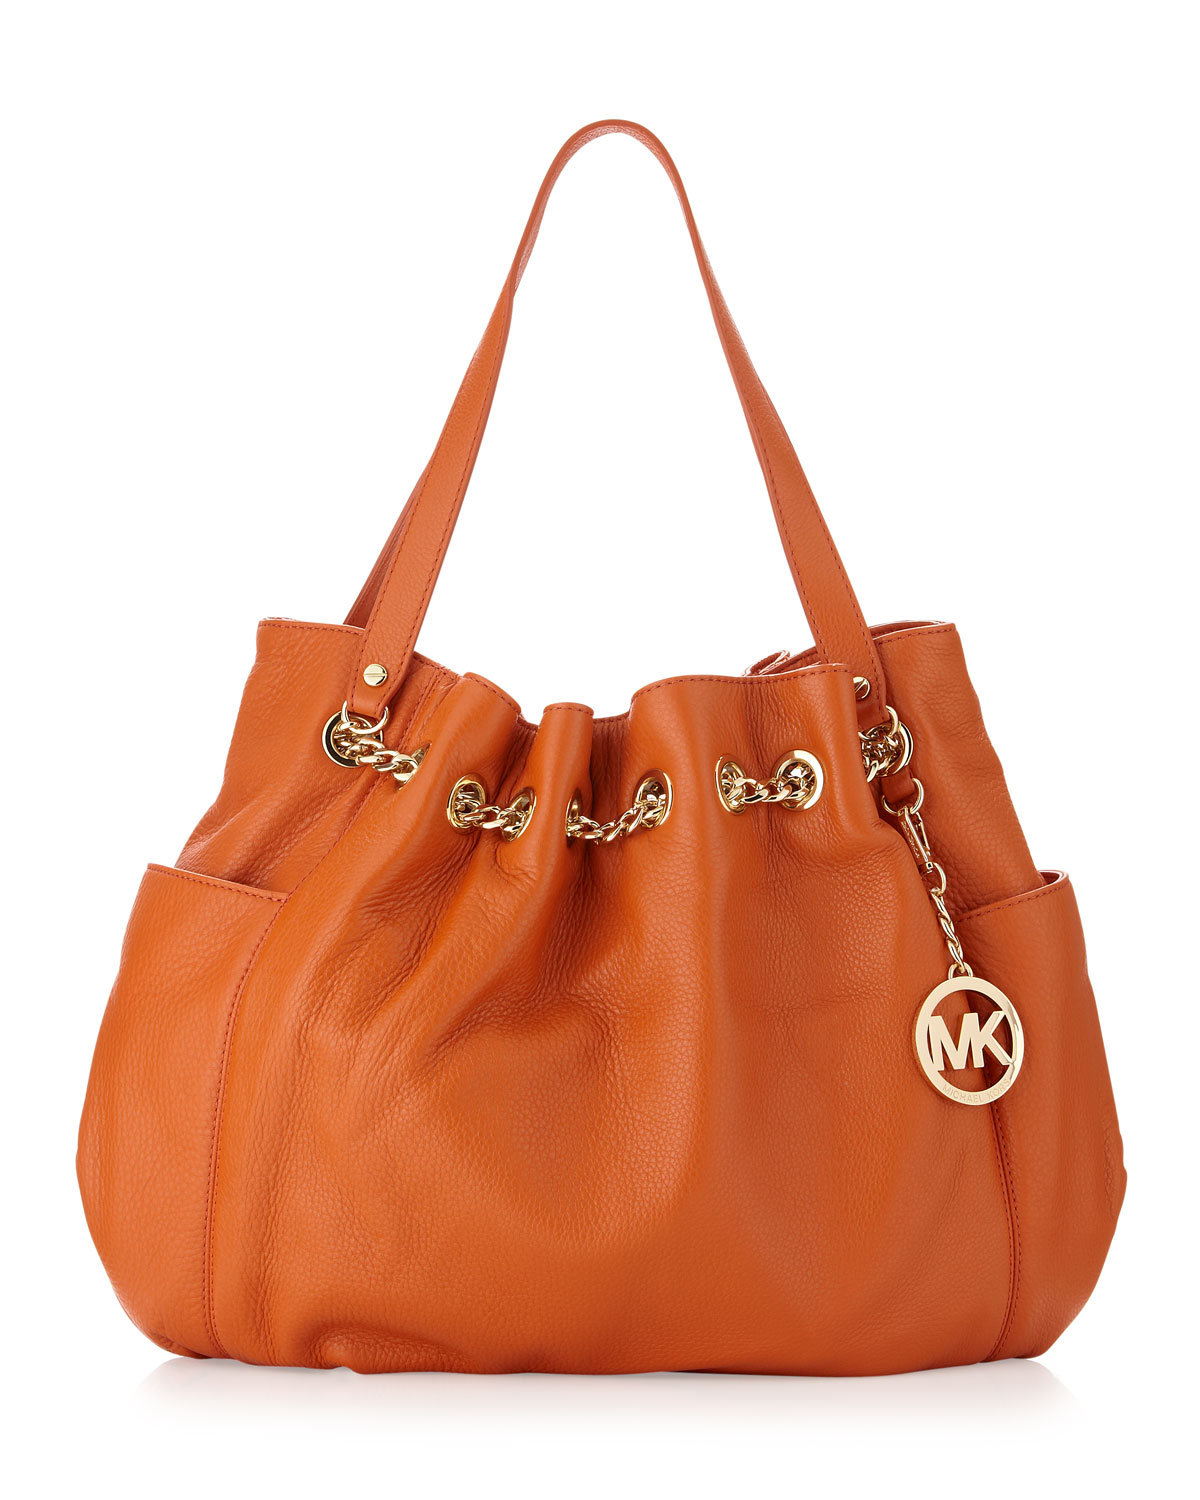 Michael Kors Jet Set Chain Ring Tote Bag in Orange (tangerine) | Lyst